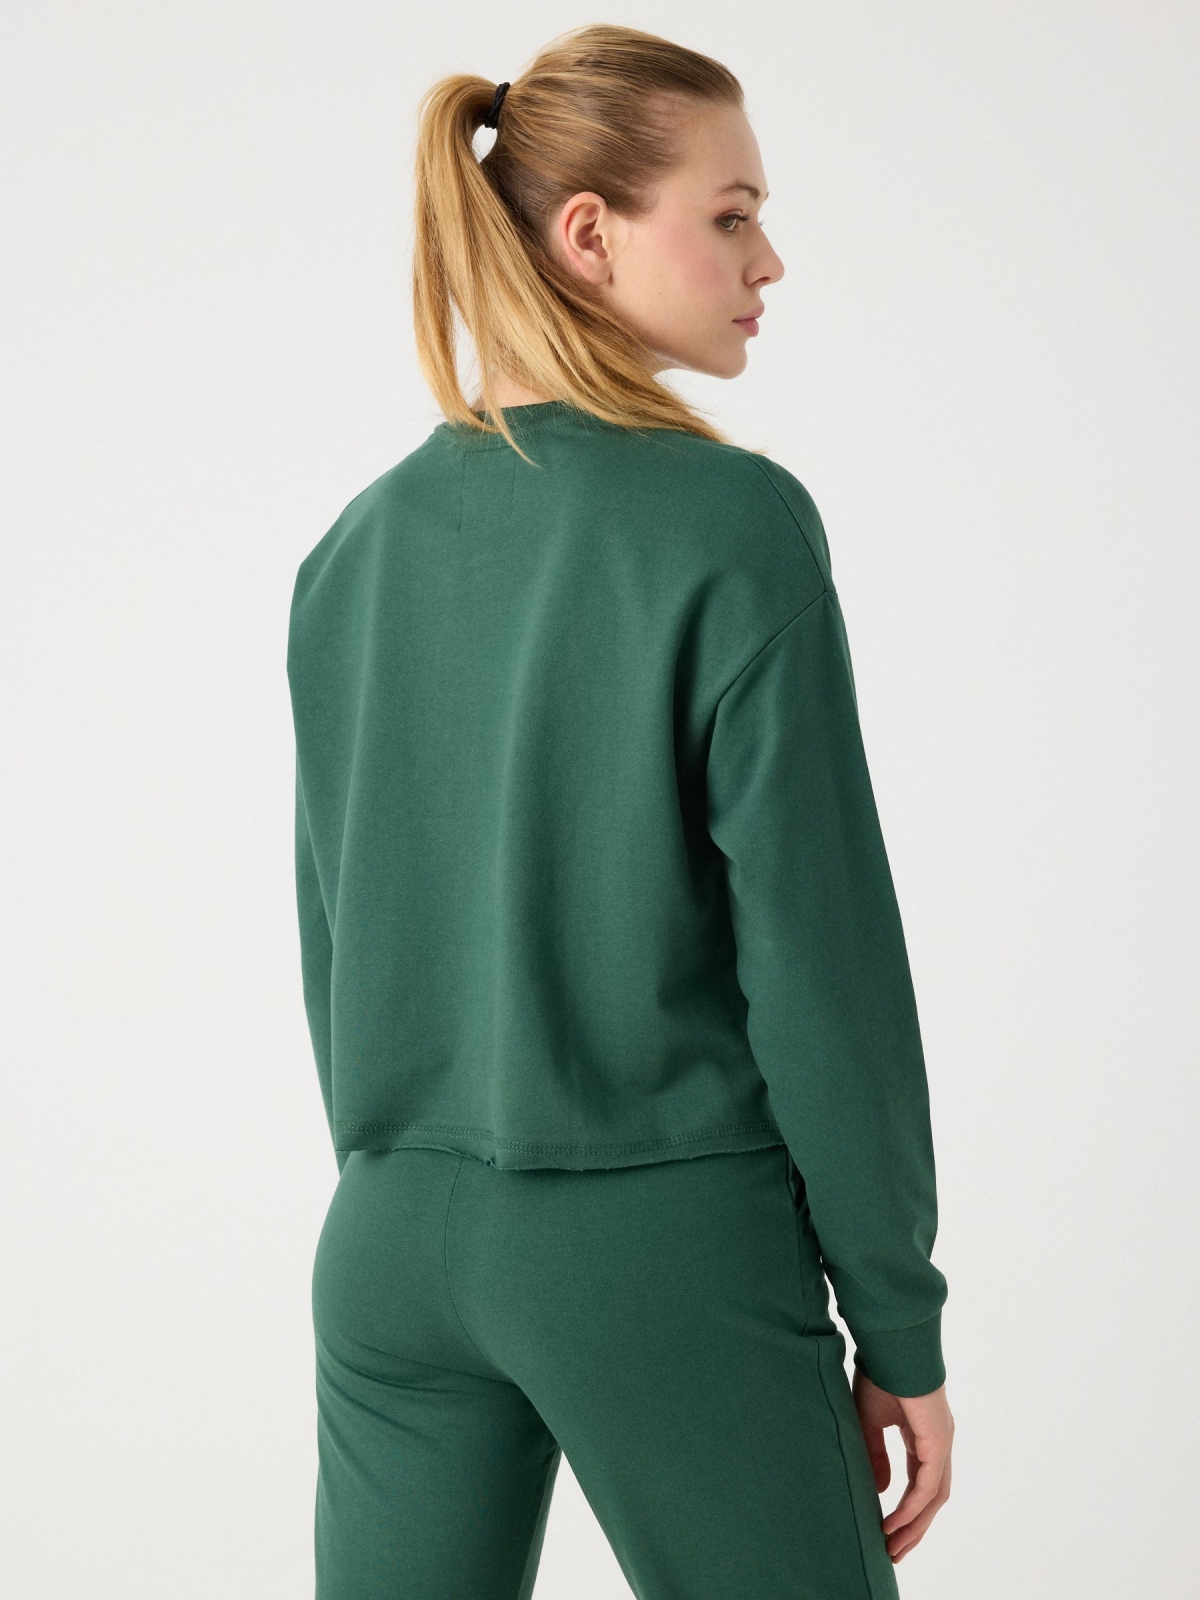 Sweatshirt cropped com estampado verde escuro vista meia traseira